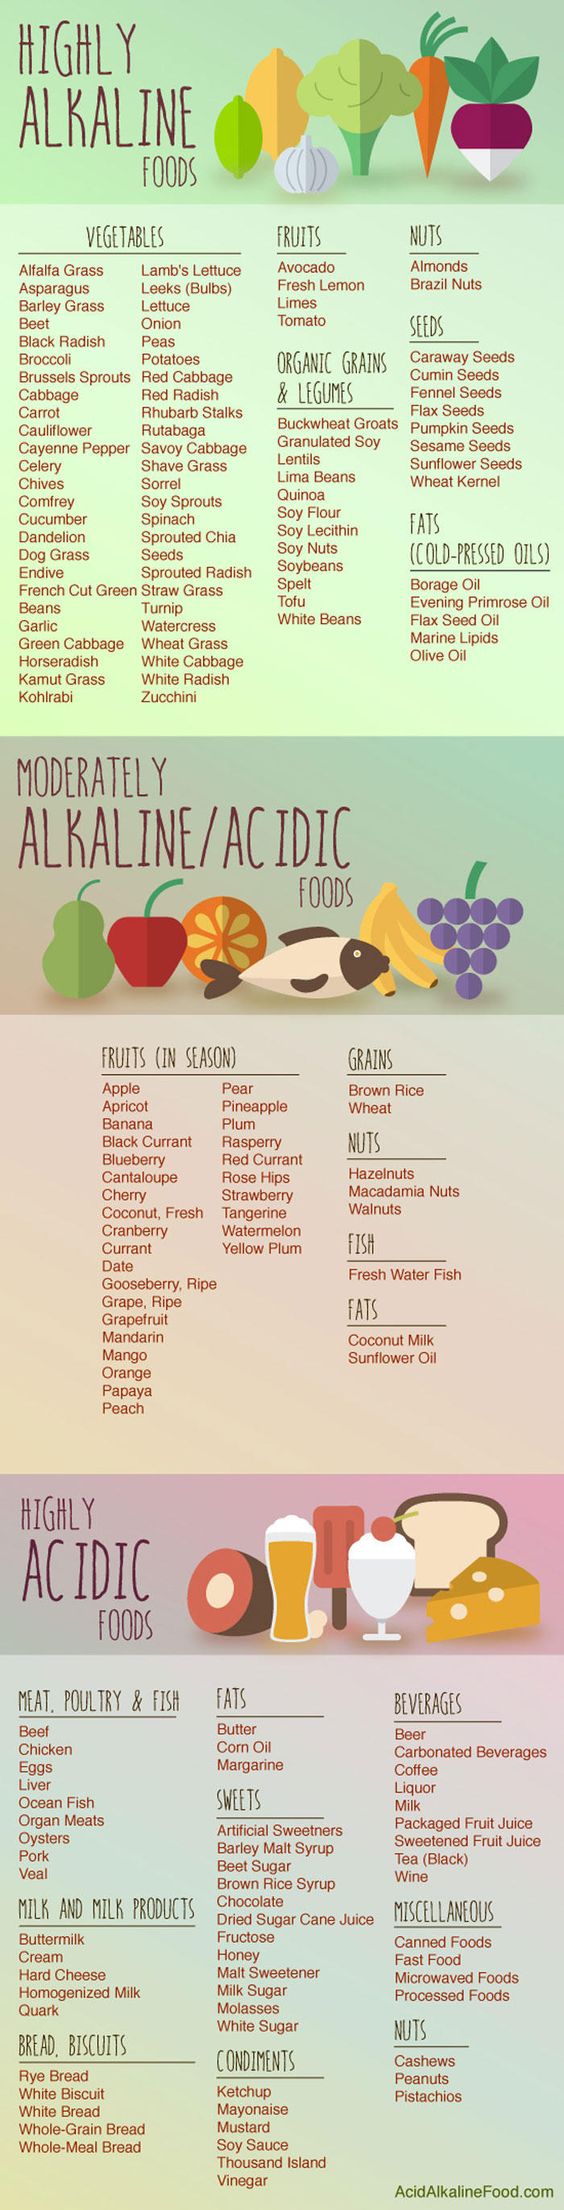 Alkaline vs Acidic Food Chart